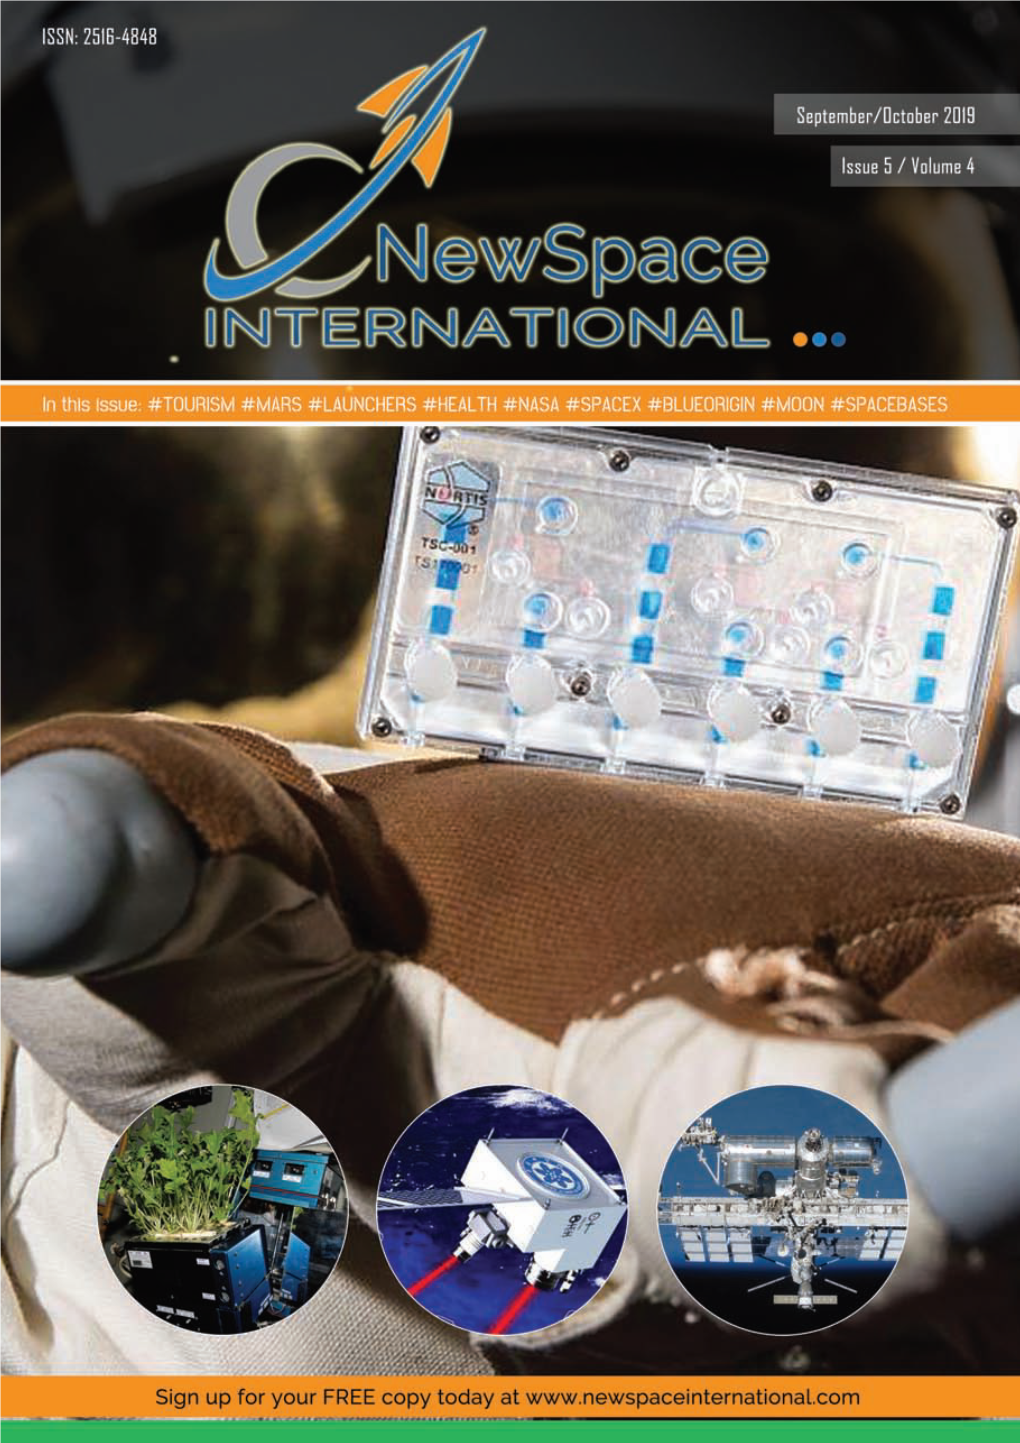 September/October 2019 1 2 Newspace International - September/October 2019 #EDITOR #NEWSPACE #NASA #TOURISM #ISS